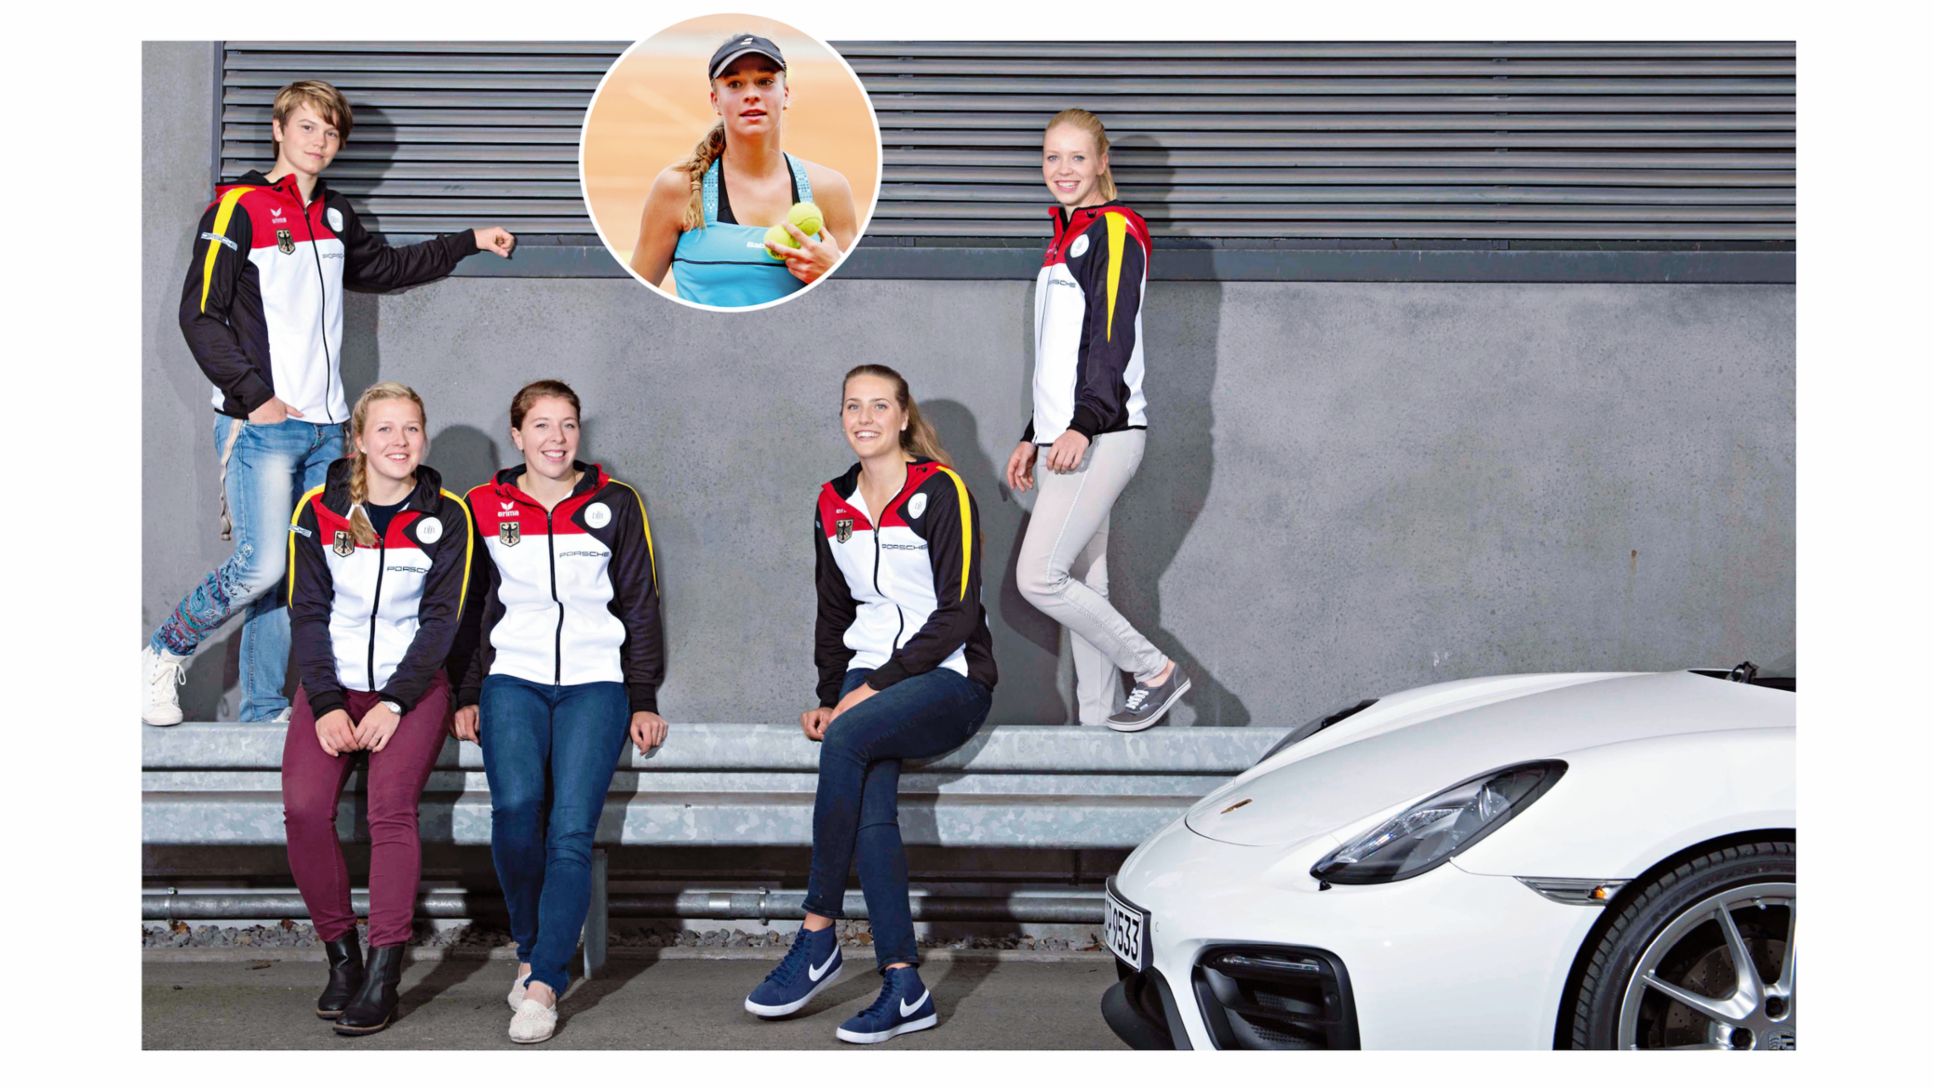 Katharina Gerlach, Lena Rueffer, Anna-Lena Friedsam, Irina Cantos Siemers, Antonia Lottner, Katharina Hobgarski, l-r, Porsche Talent Team Deutschland, 2016, Porsche AG  